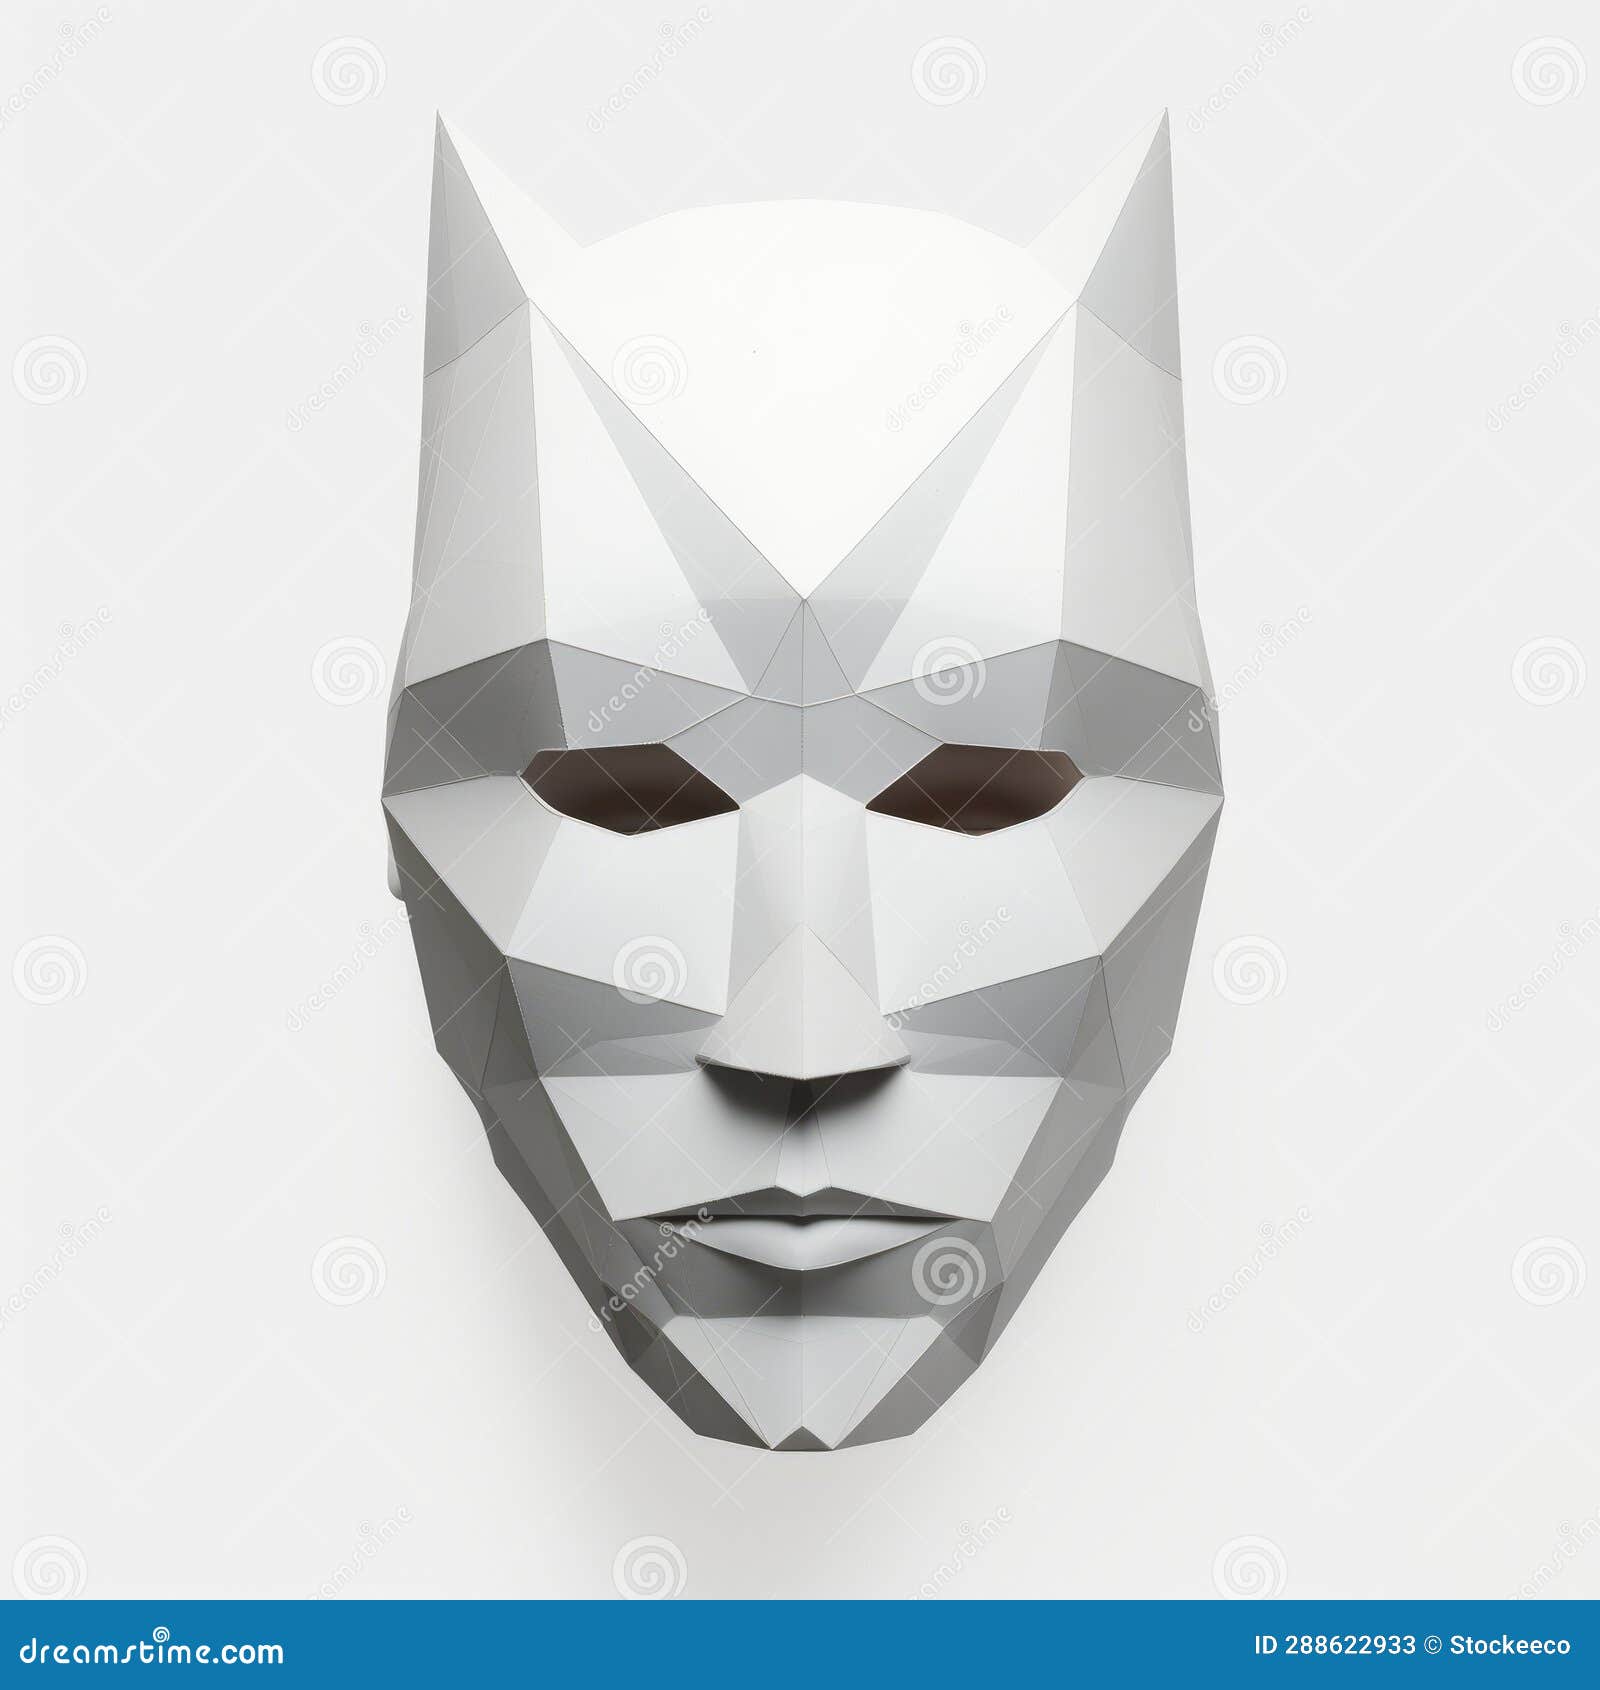 minimalistic paper cut batman mask with white background